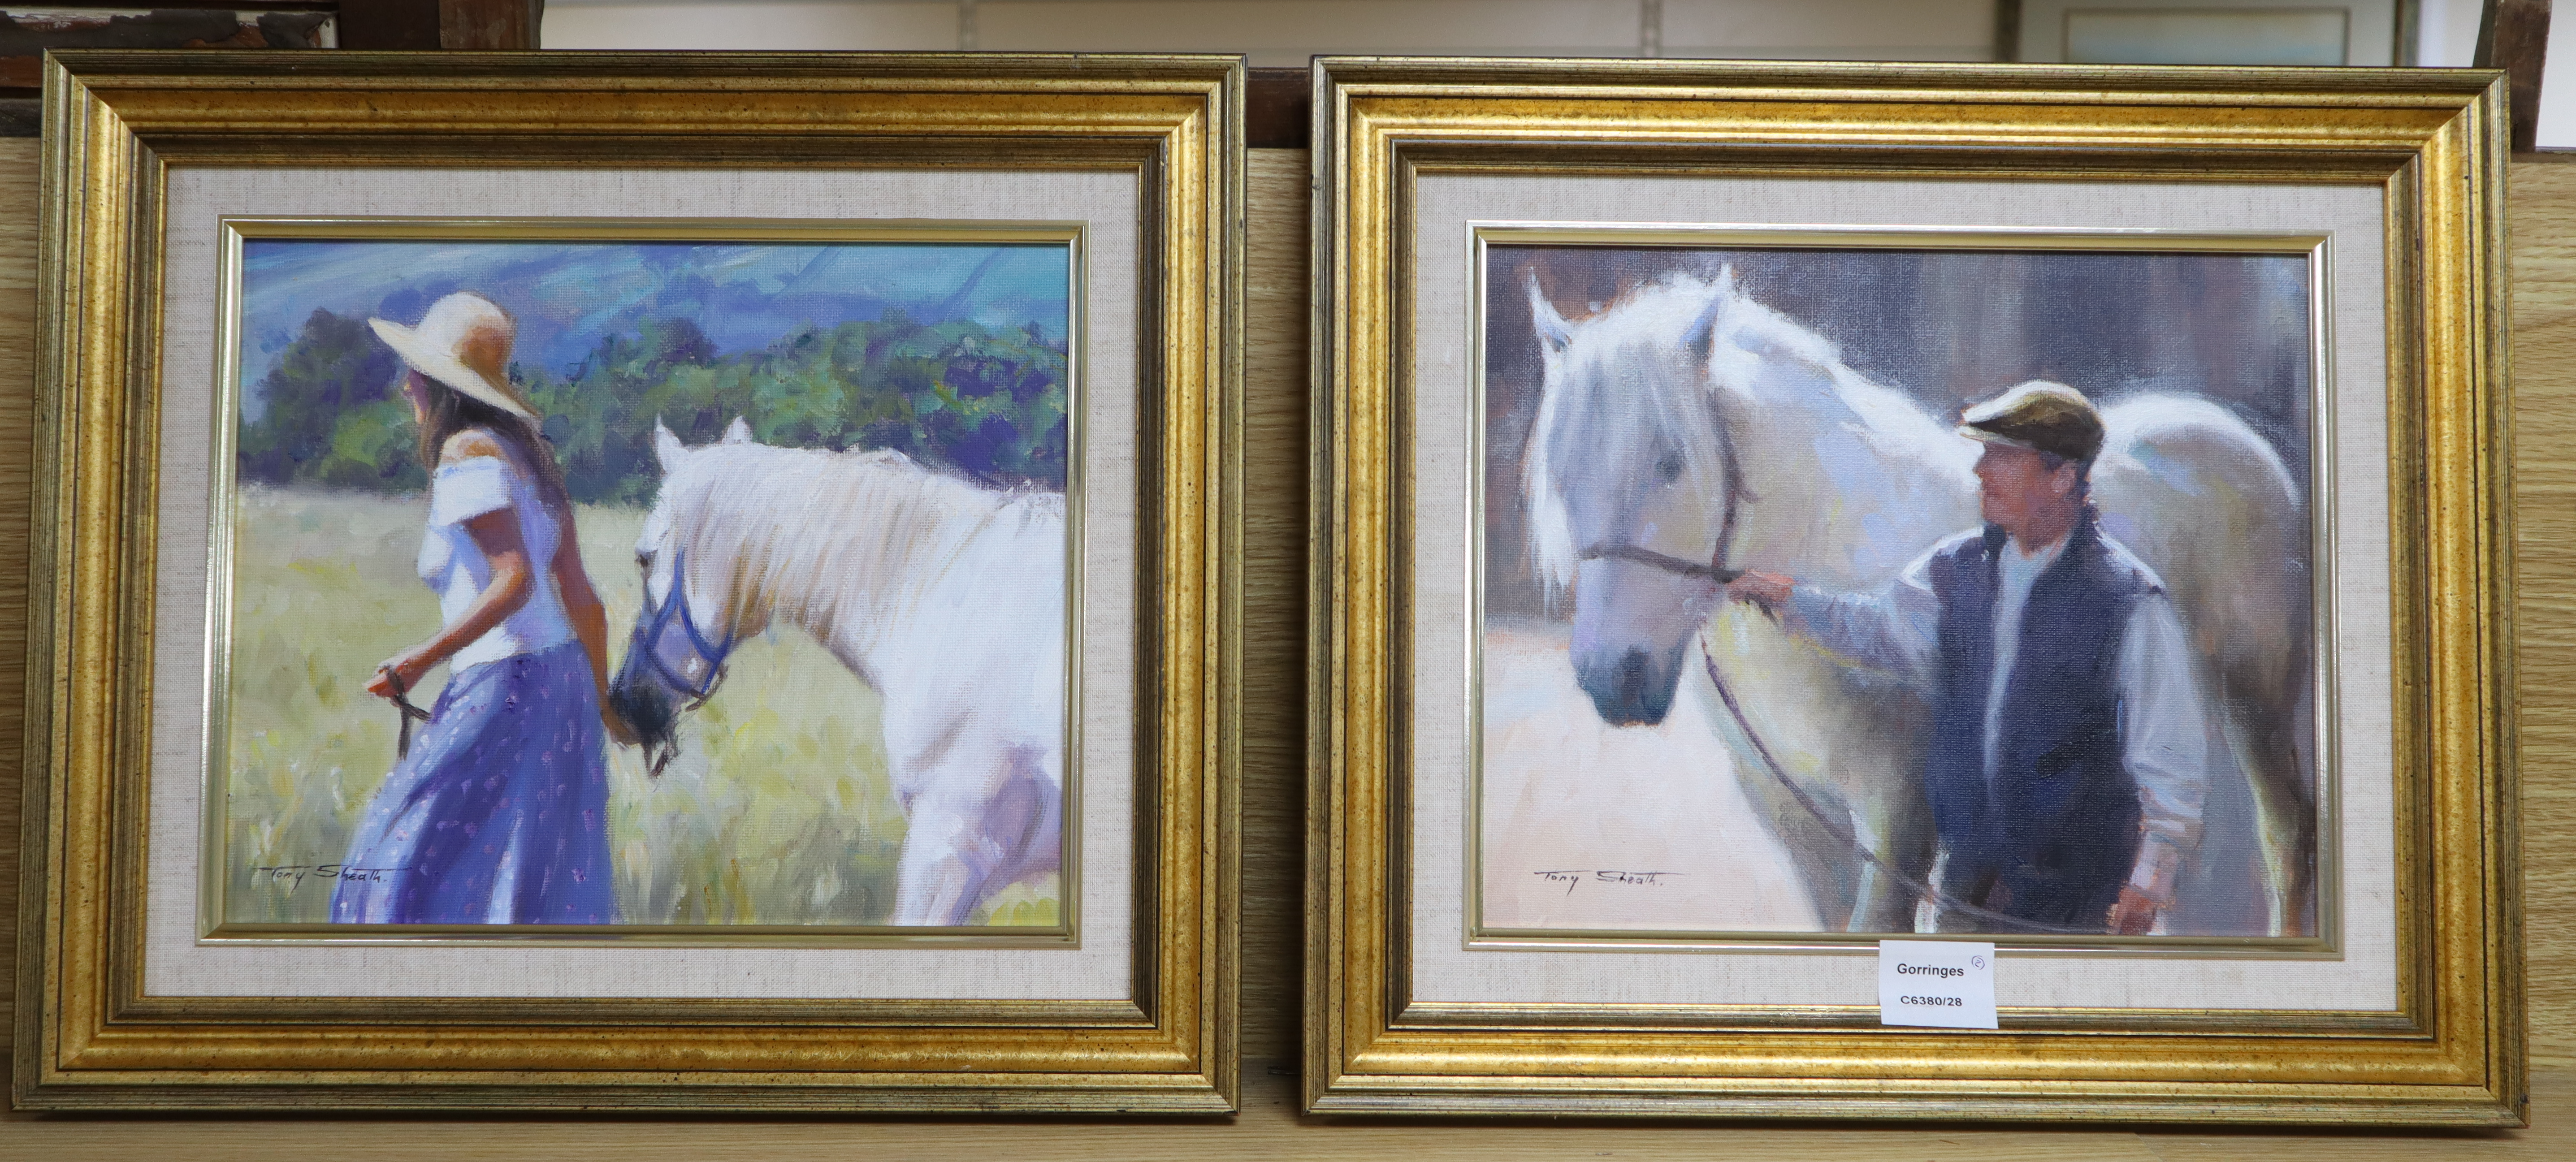 Tony Sheath, pair of oils on board, Figures with horses, 24 x 29cm